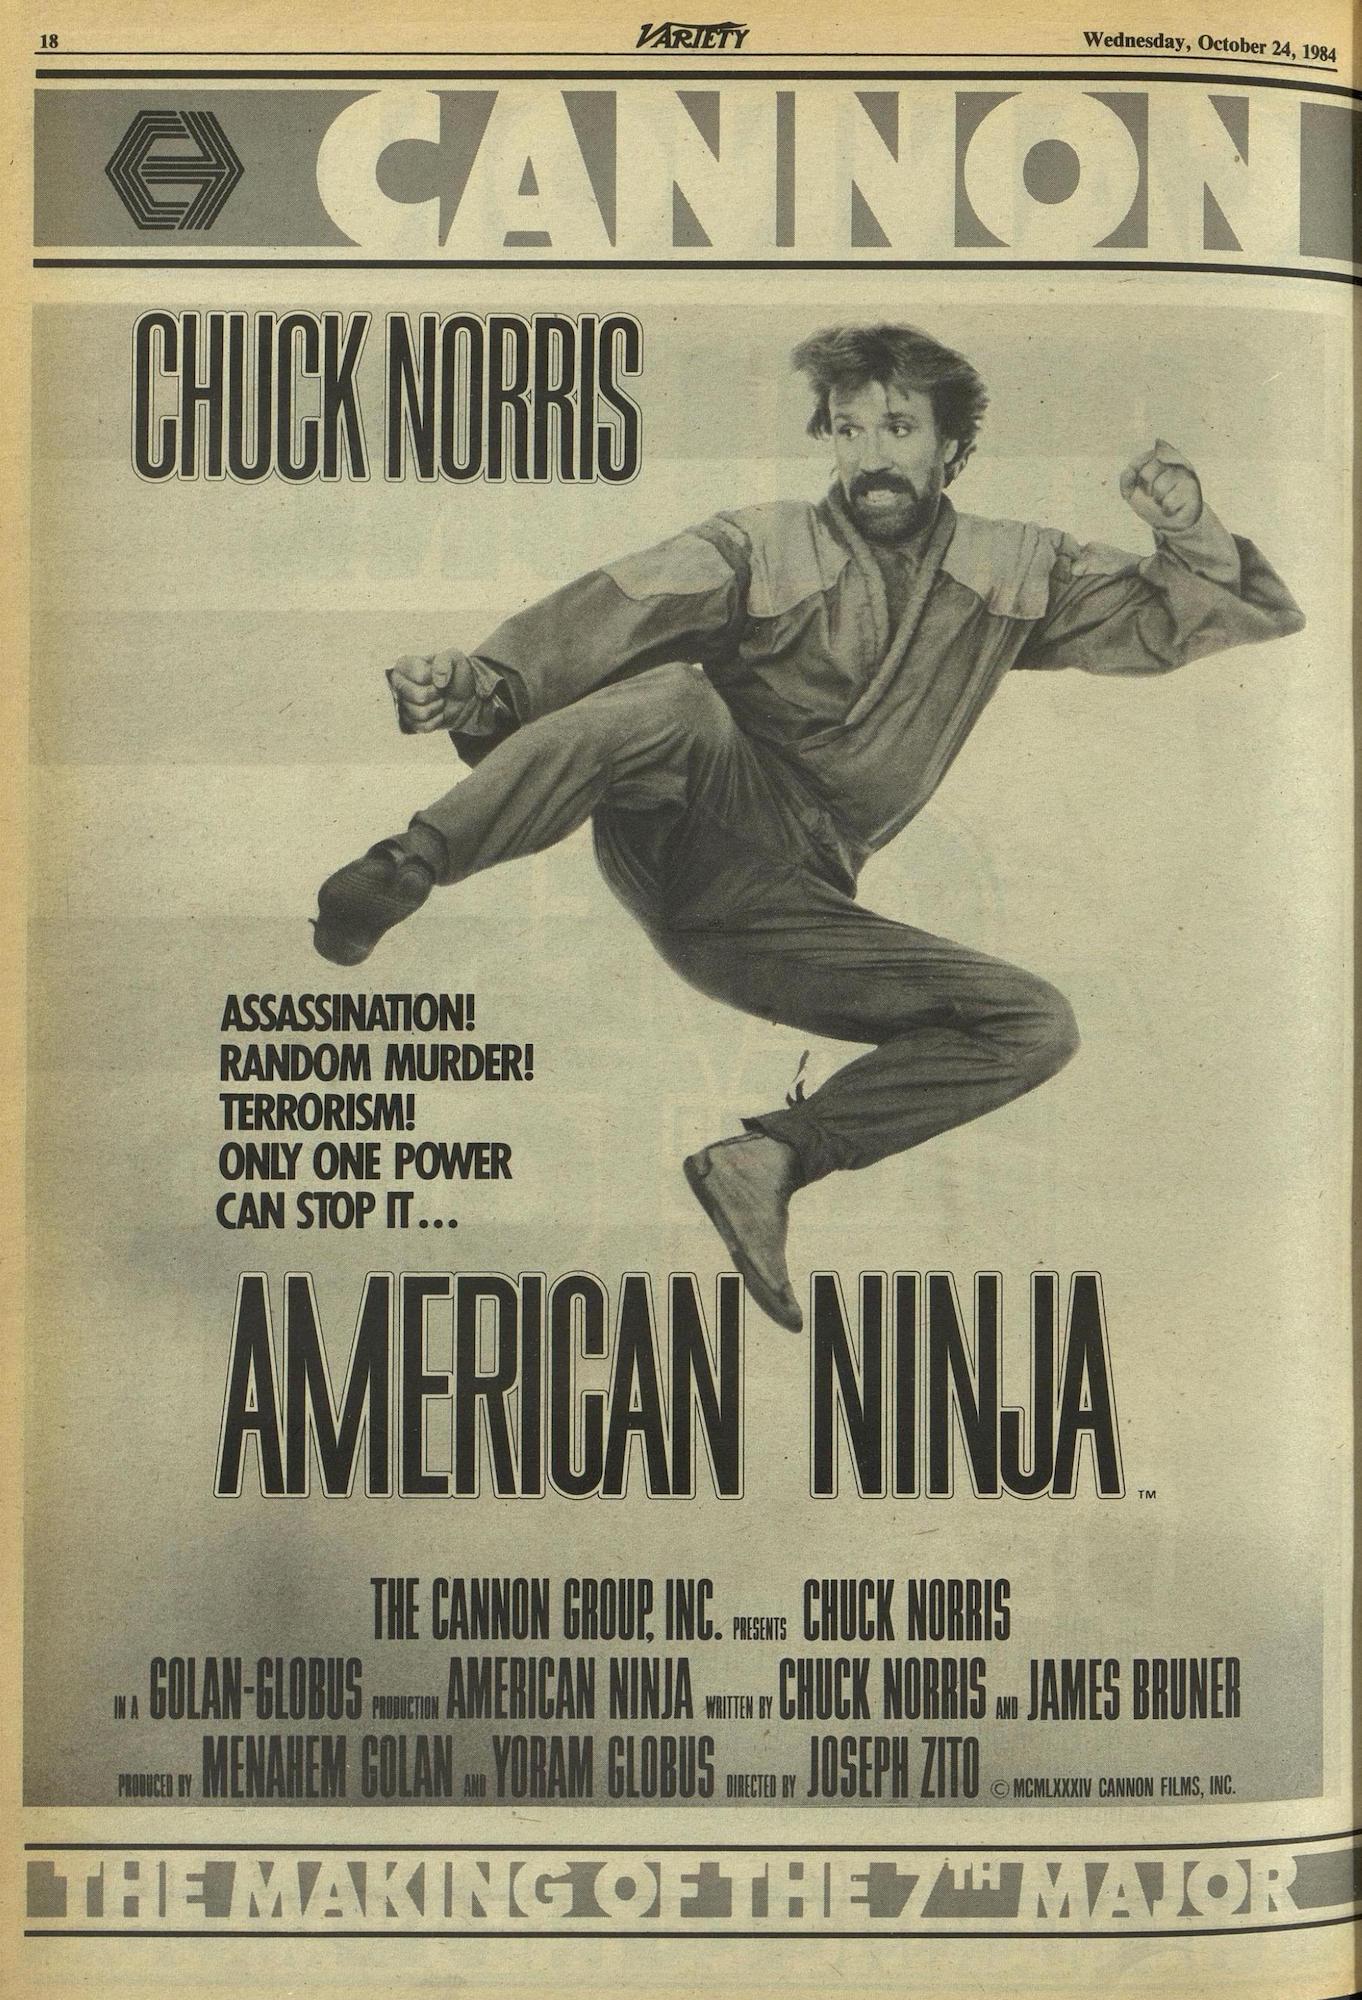 cannon-variety-1984-chuck-norris-american-ninja.jpg